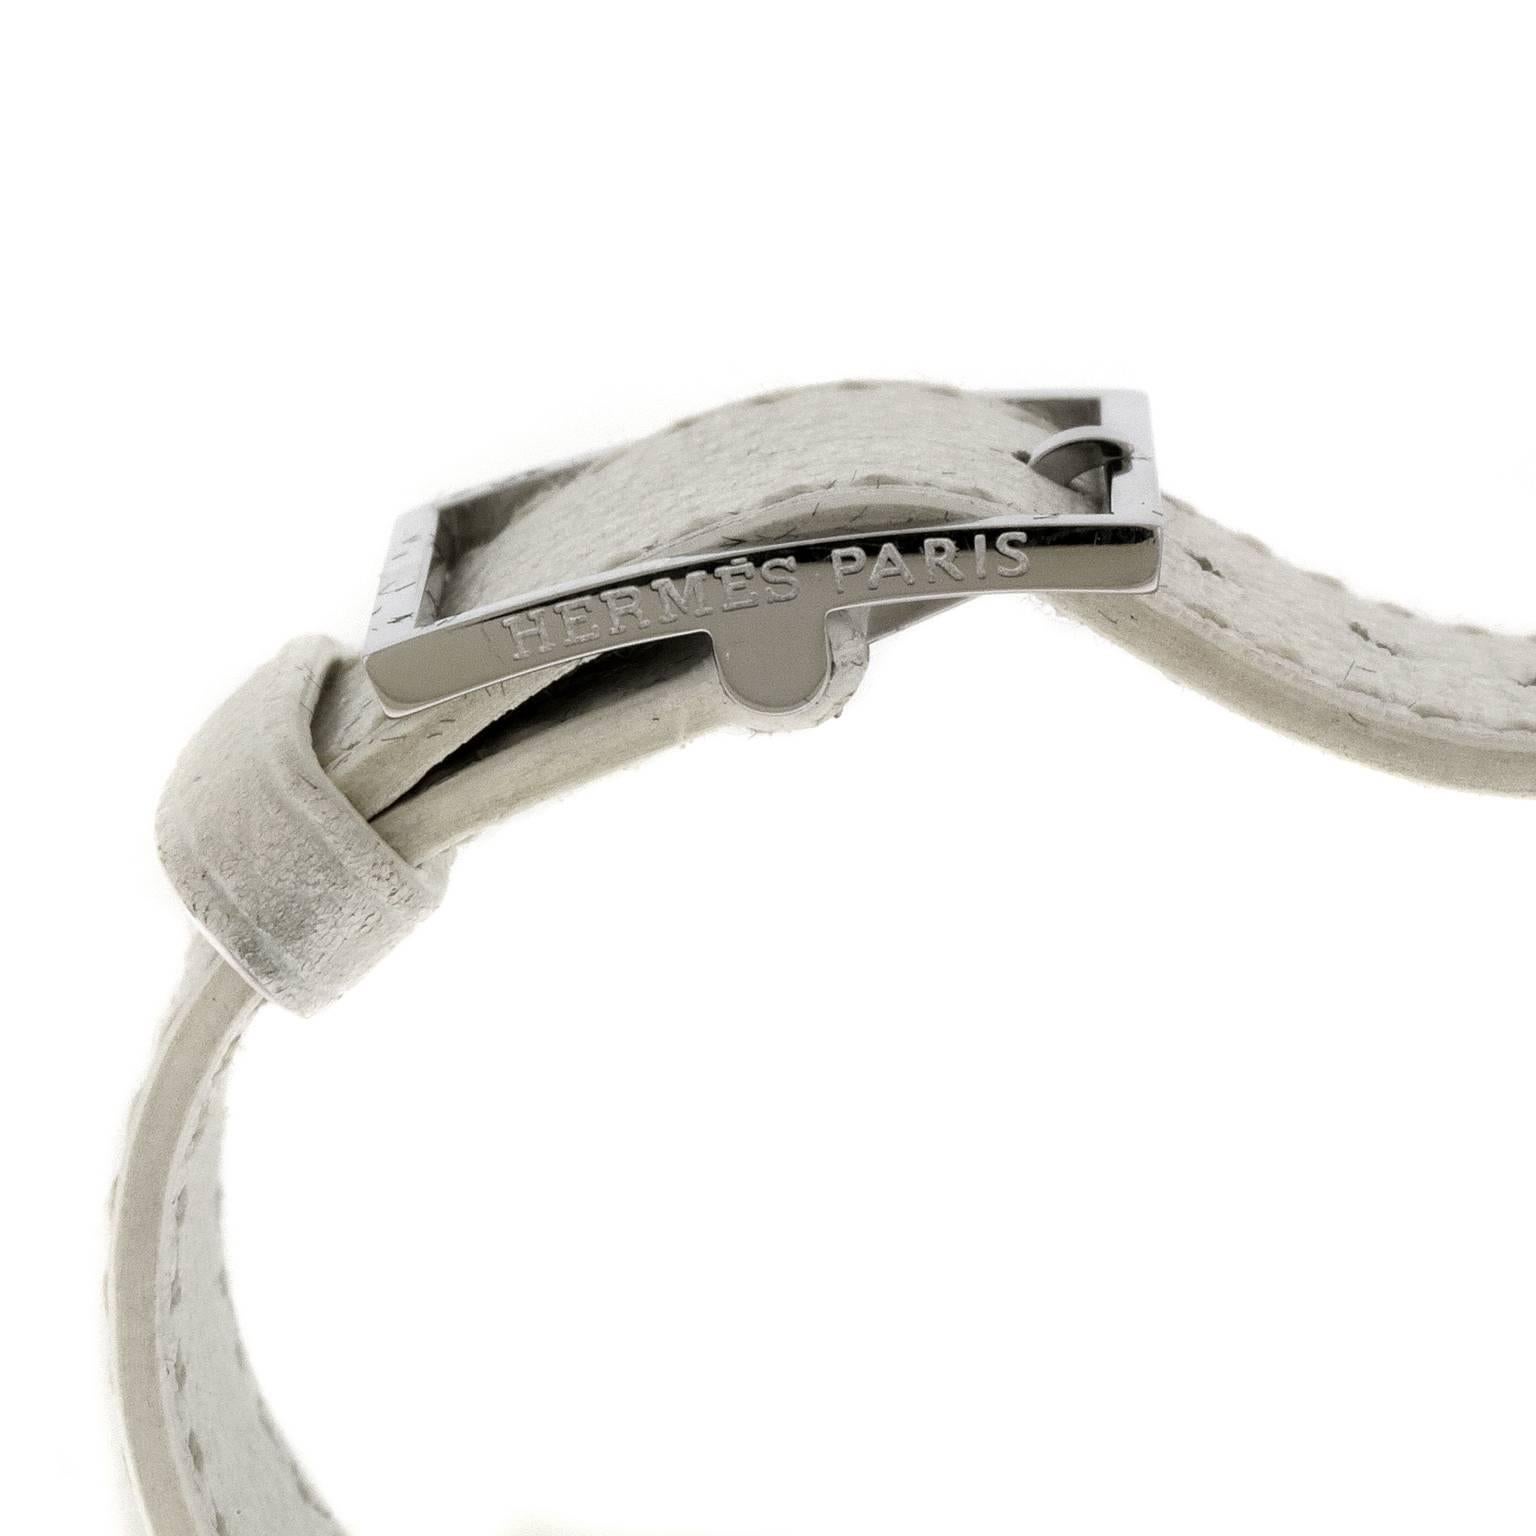  Hermès White Leather Hidden Bracelet Watch 2